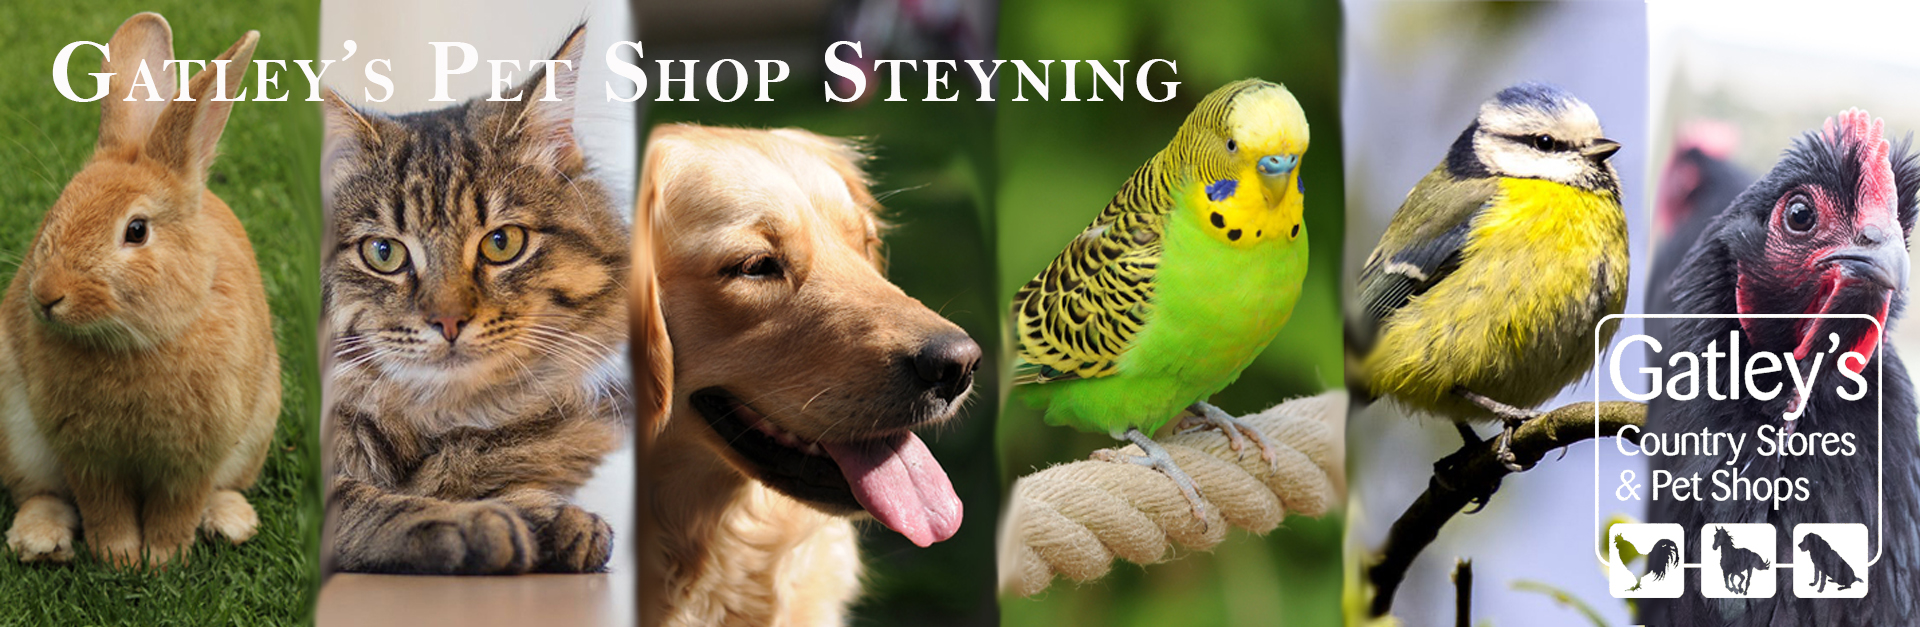 gatleys pet shop steyning